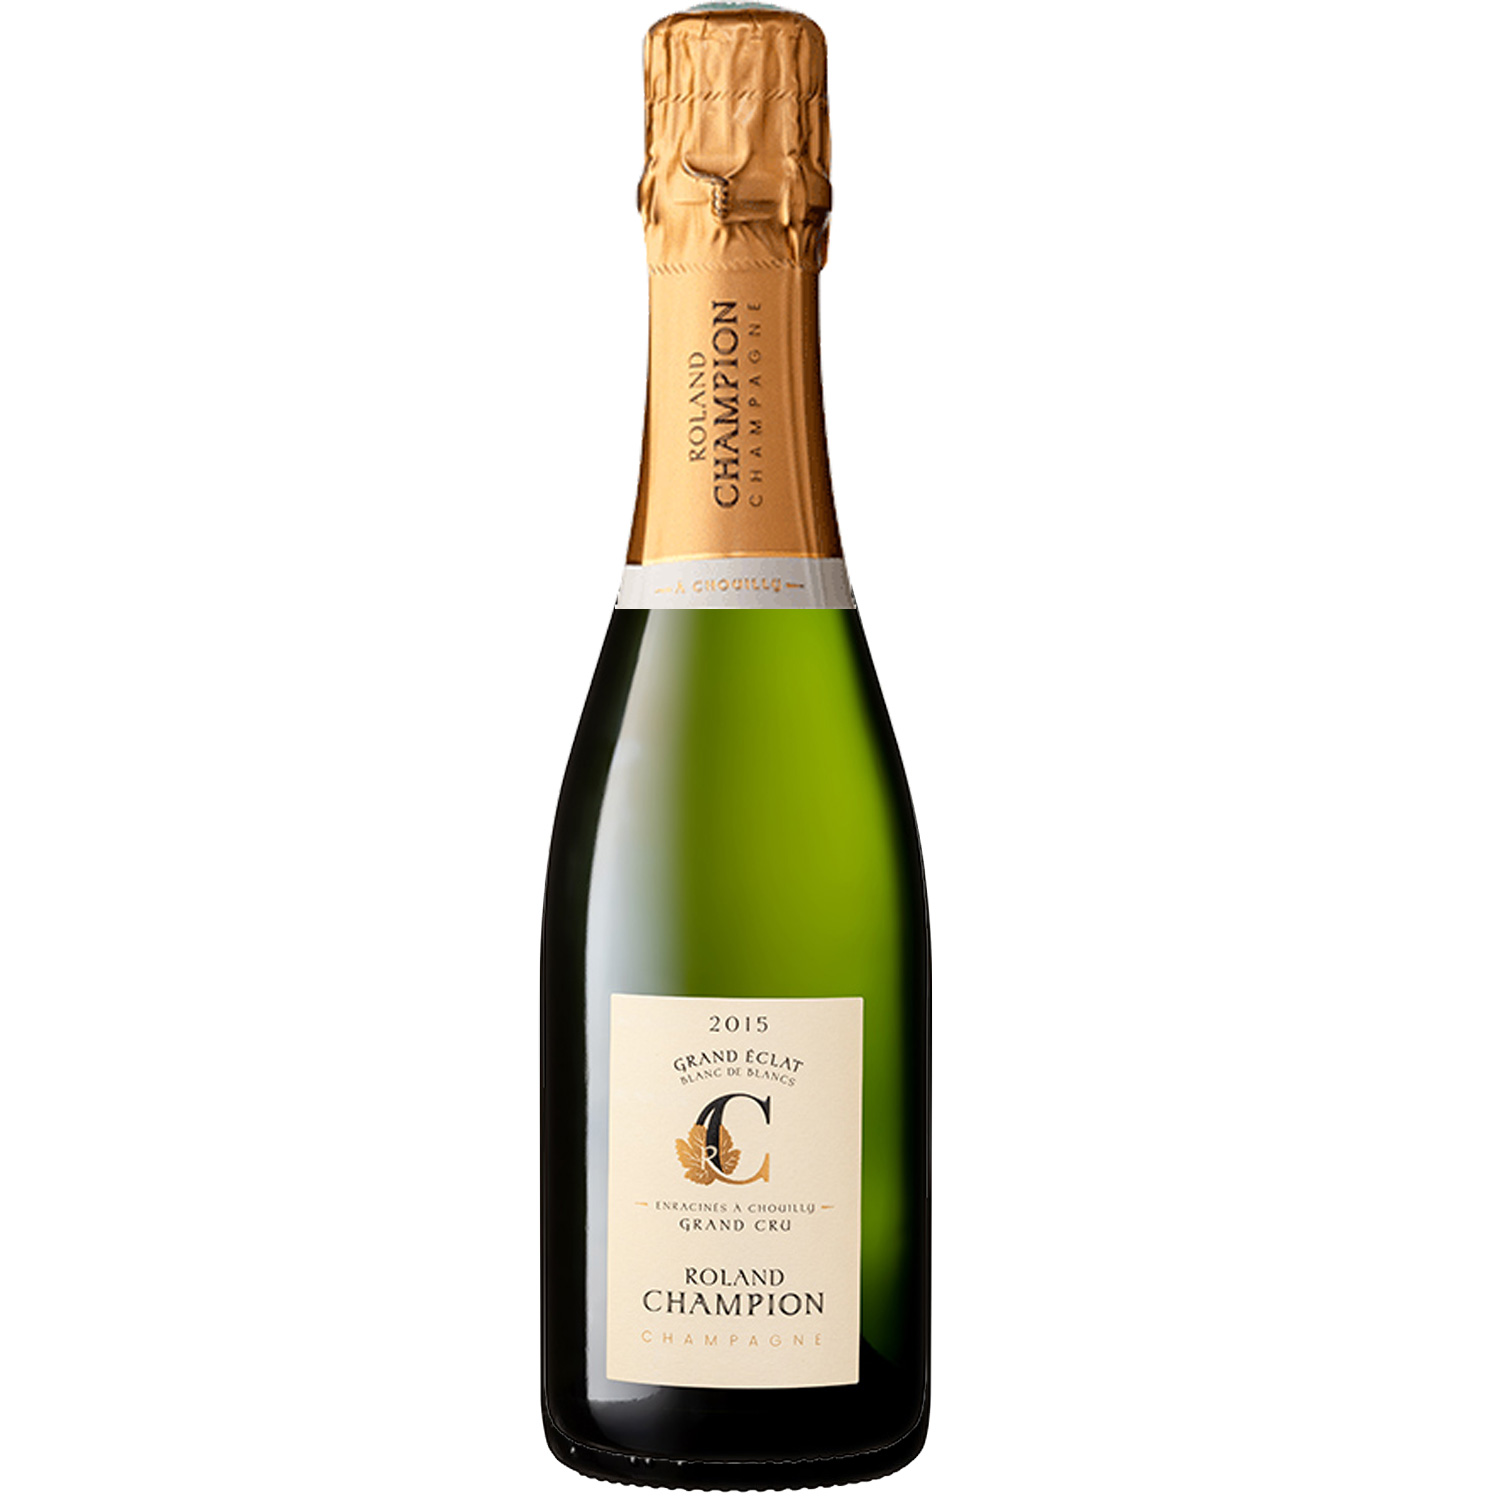 halbe_flasche_grand_eclat2015_champagne_roland_champion